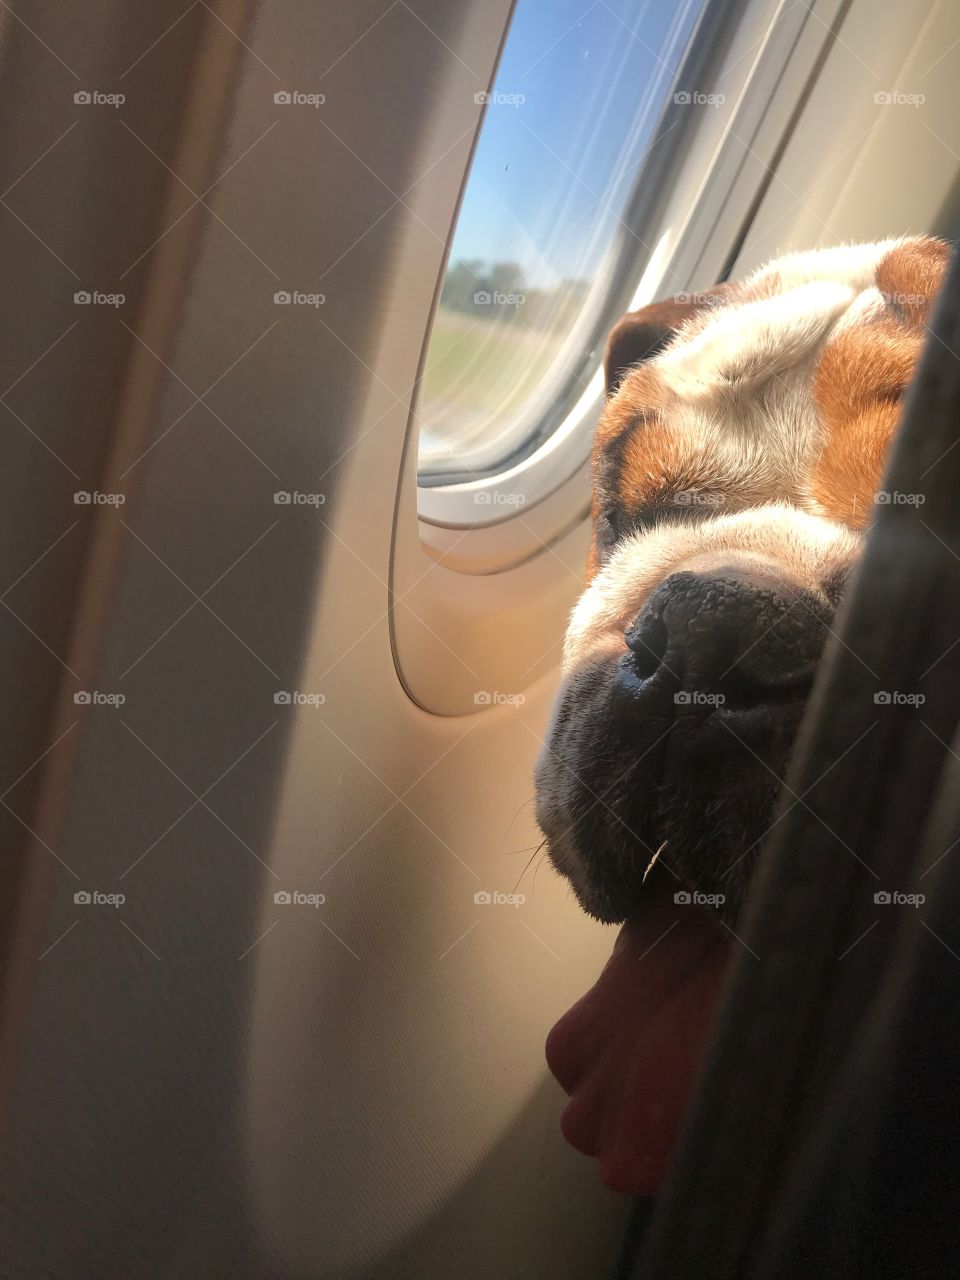 Bulldog on a plane